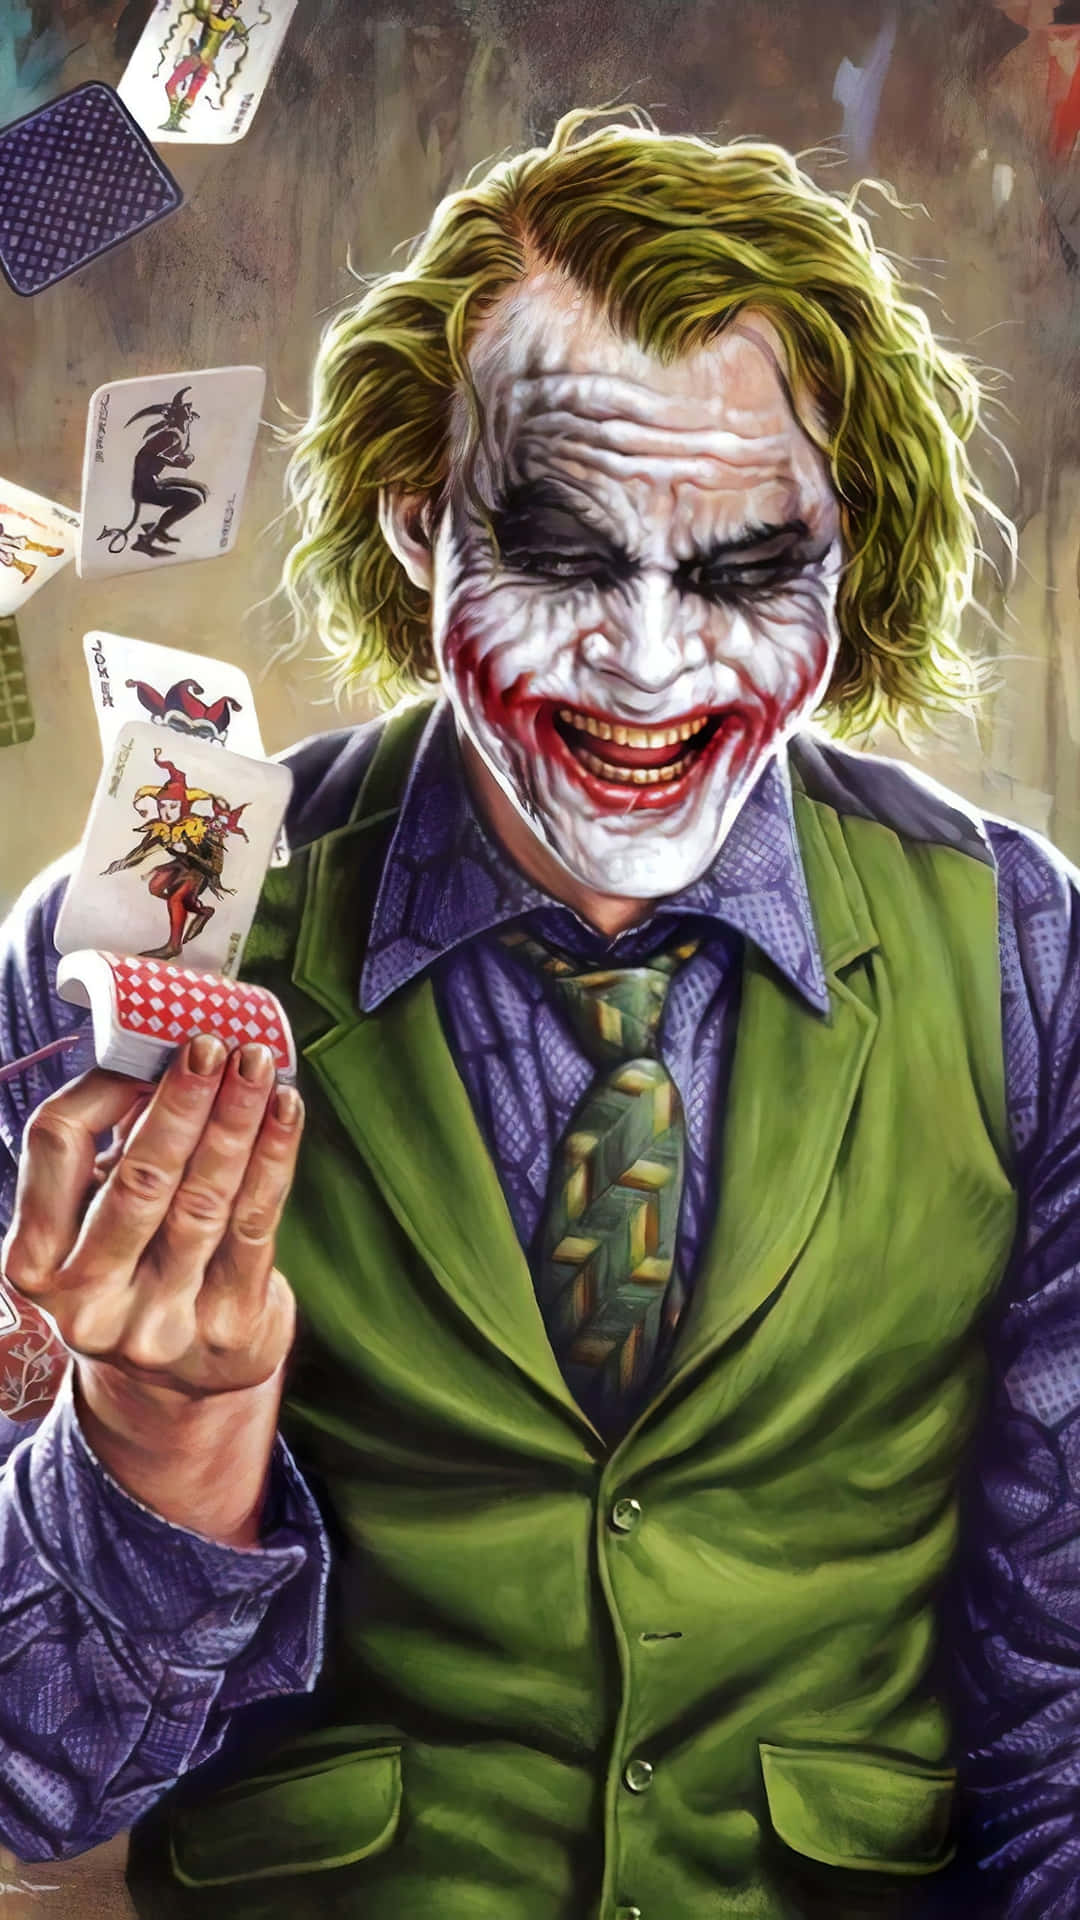 Captivating Joker Laughing Wallpaper Background